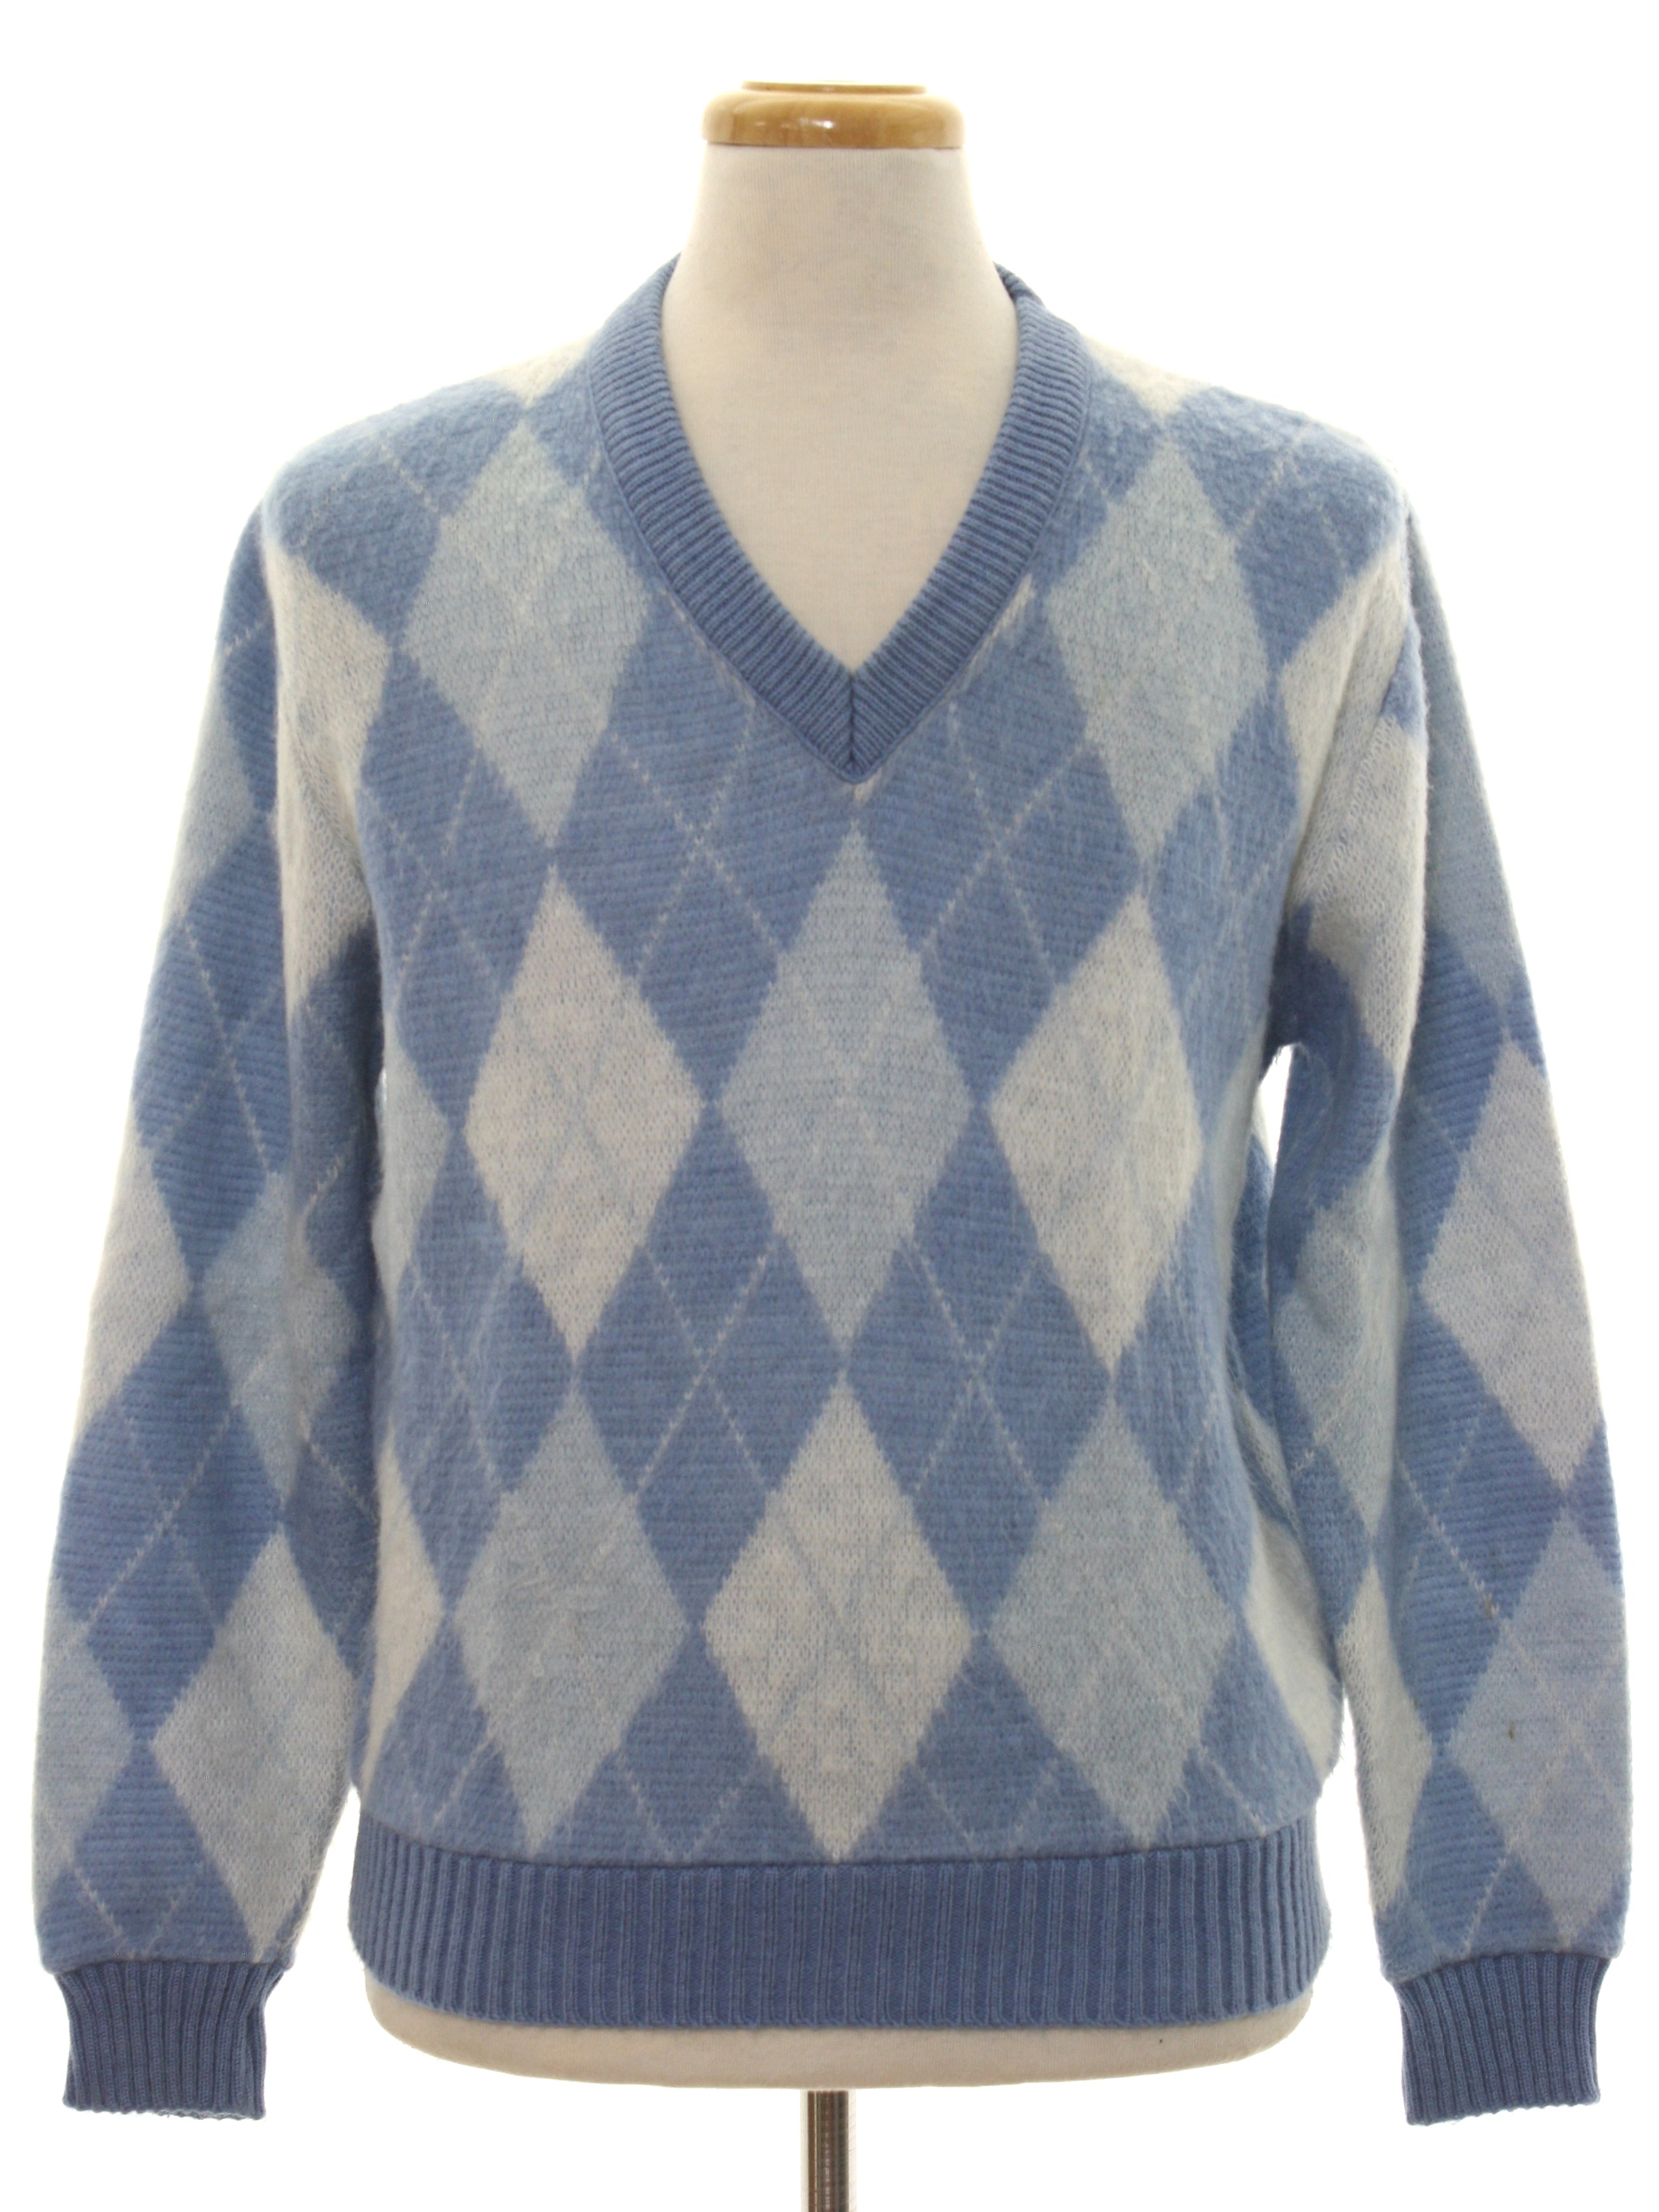 Retro 1960s Sweater: Late 60s -Jantzen- Mens light blue, white and